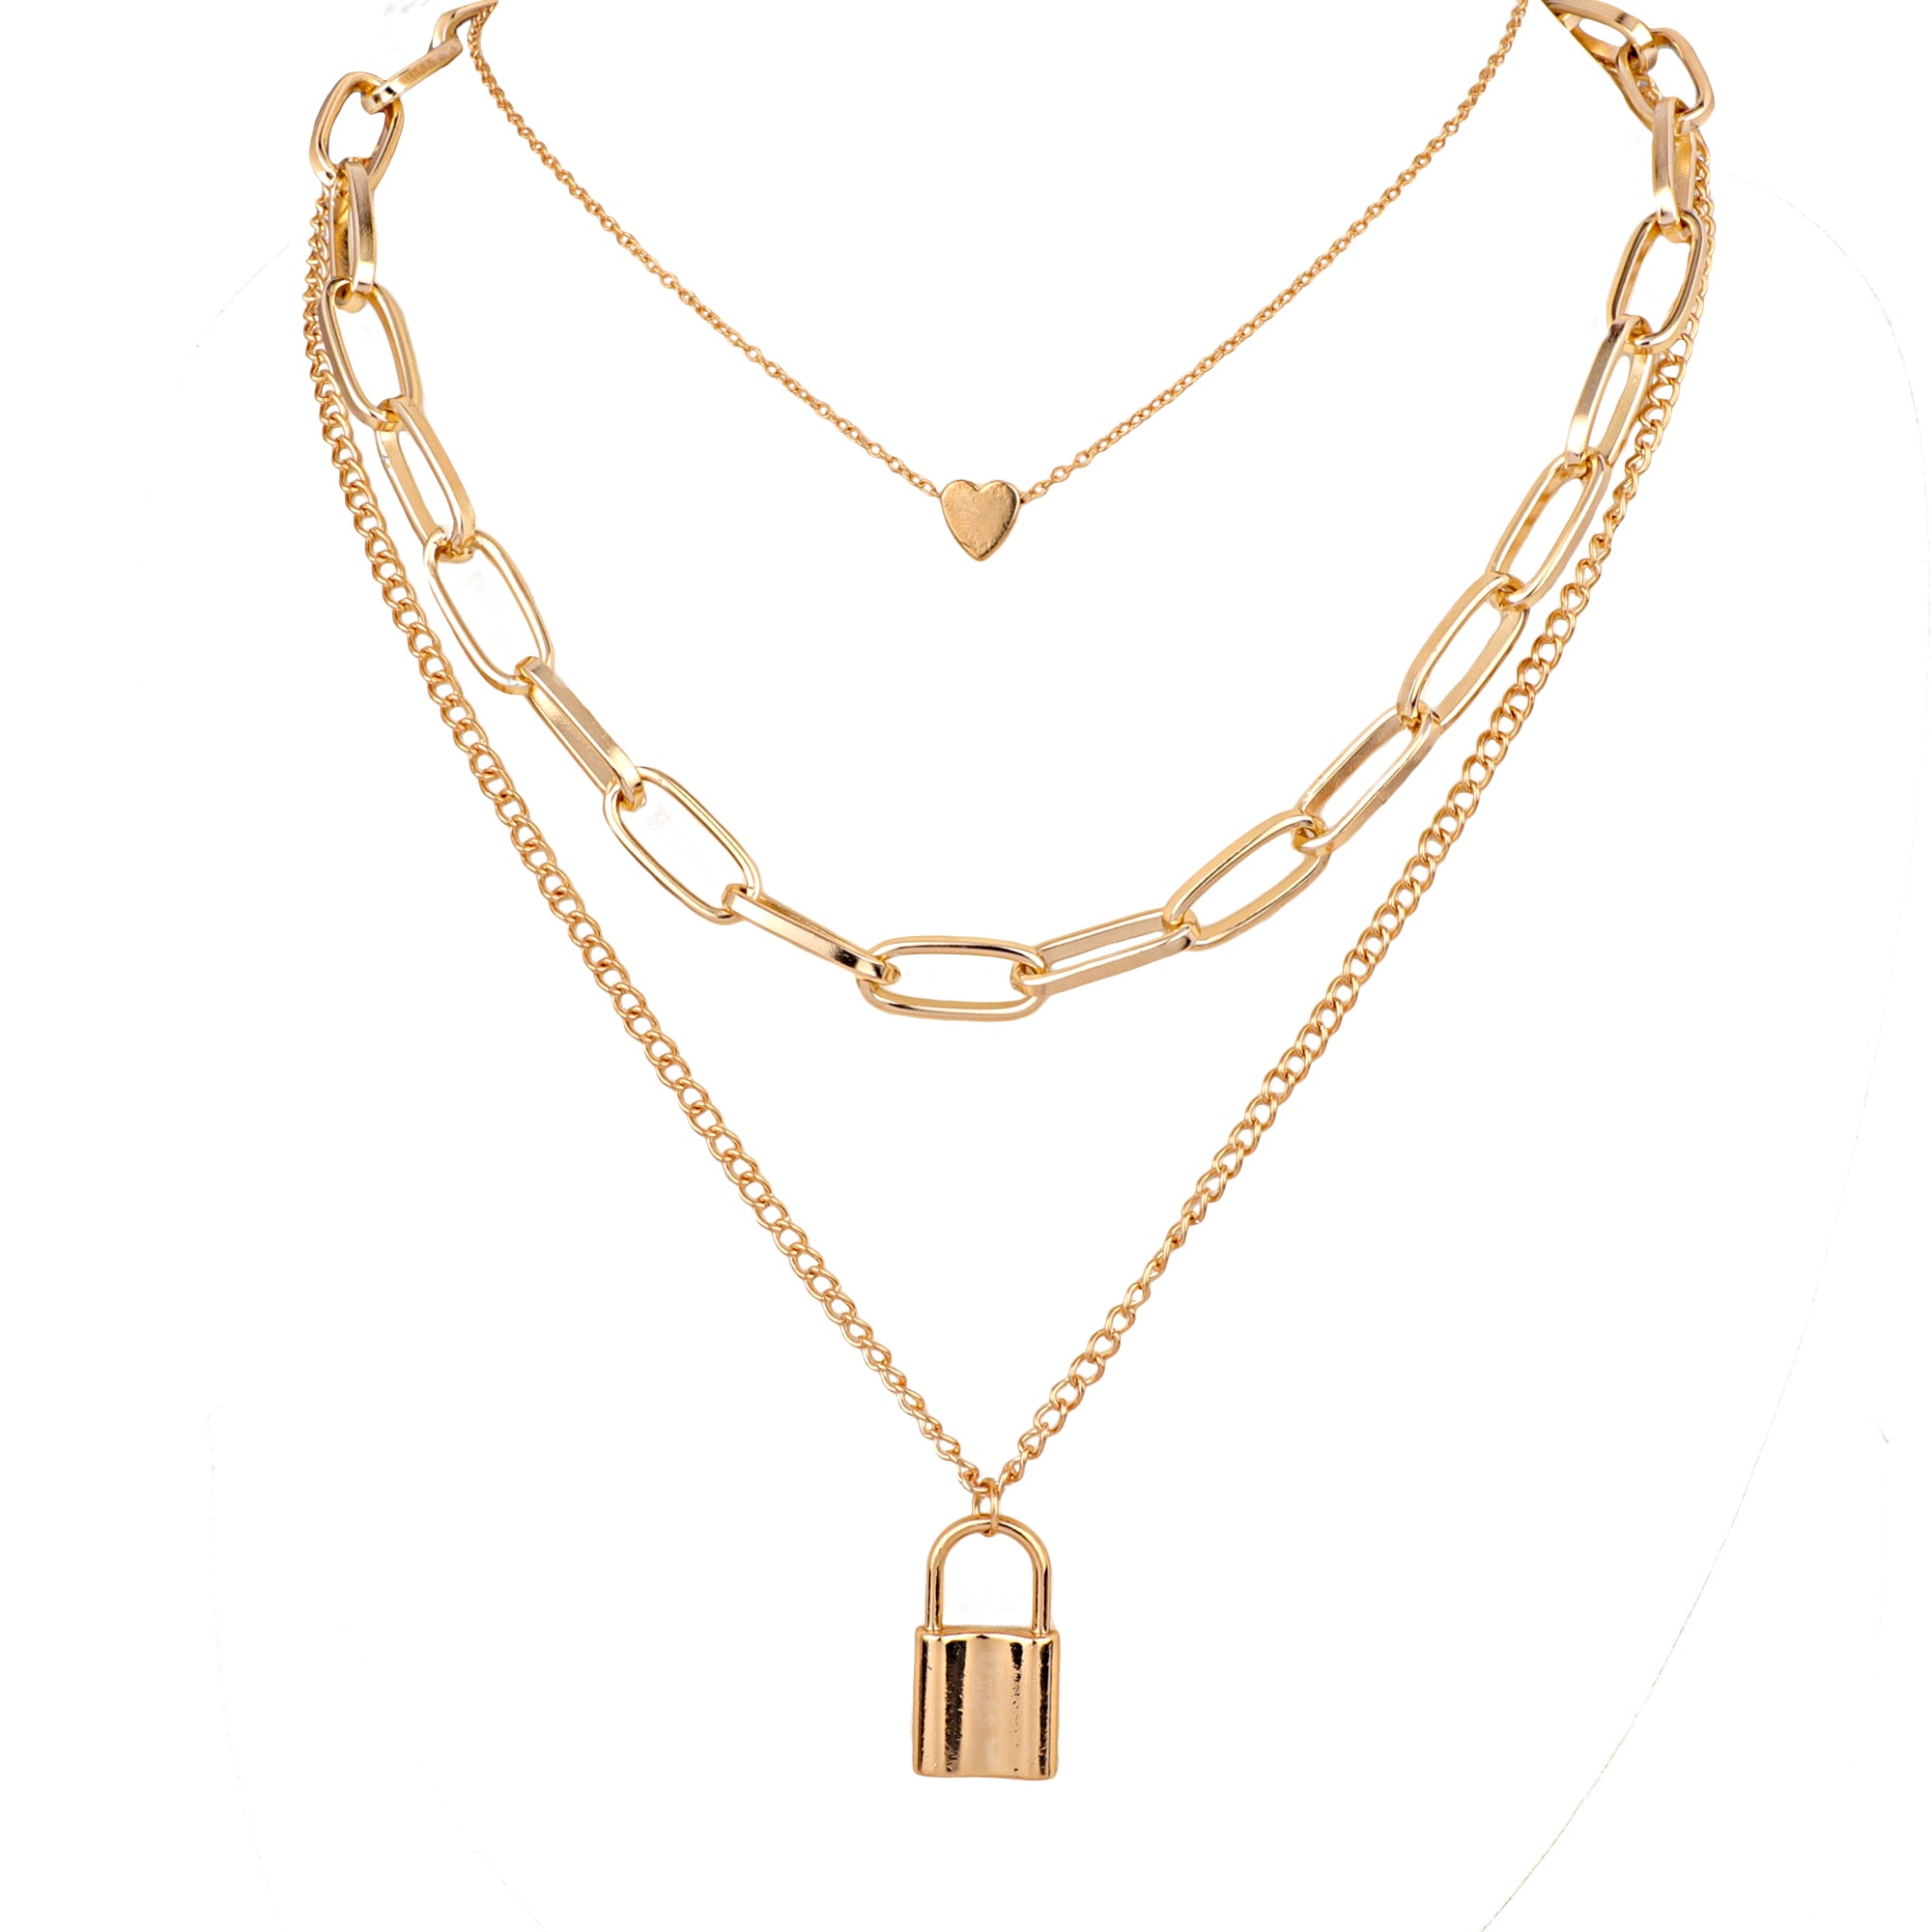 Silver Padlock Necklace Stainless Steel Oval Chain Link Lock Pendant Charm  Choker Handmade in LA - Etsy